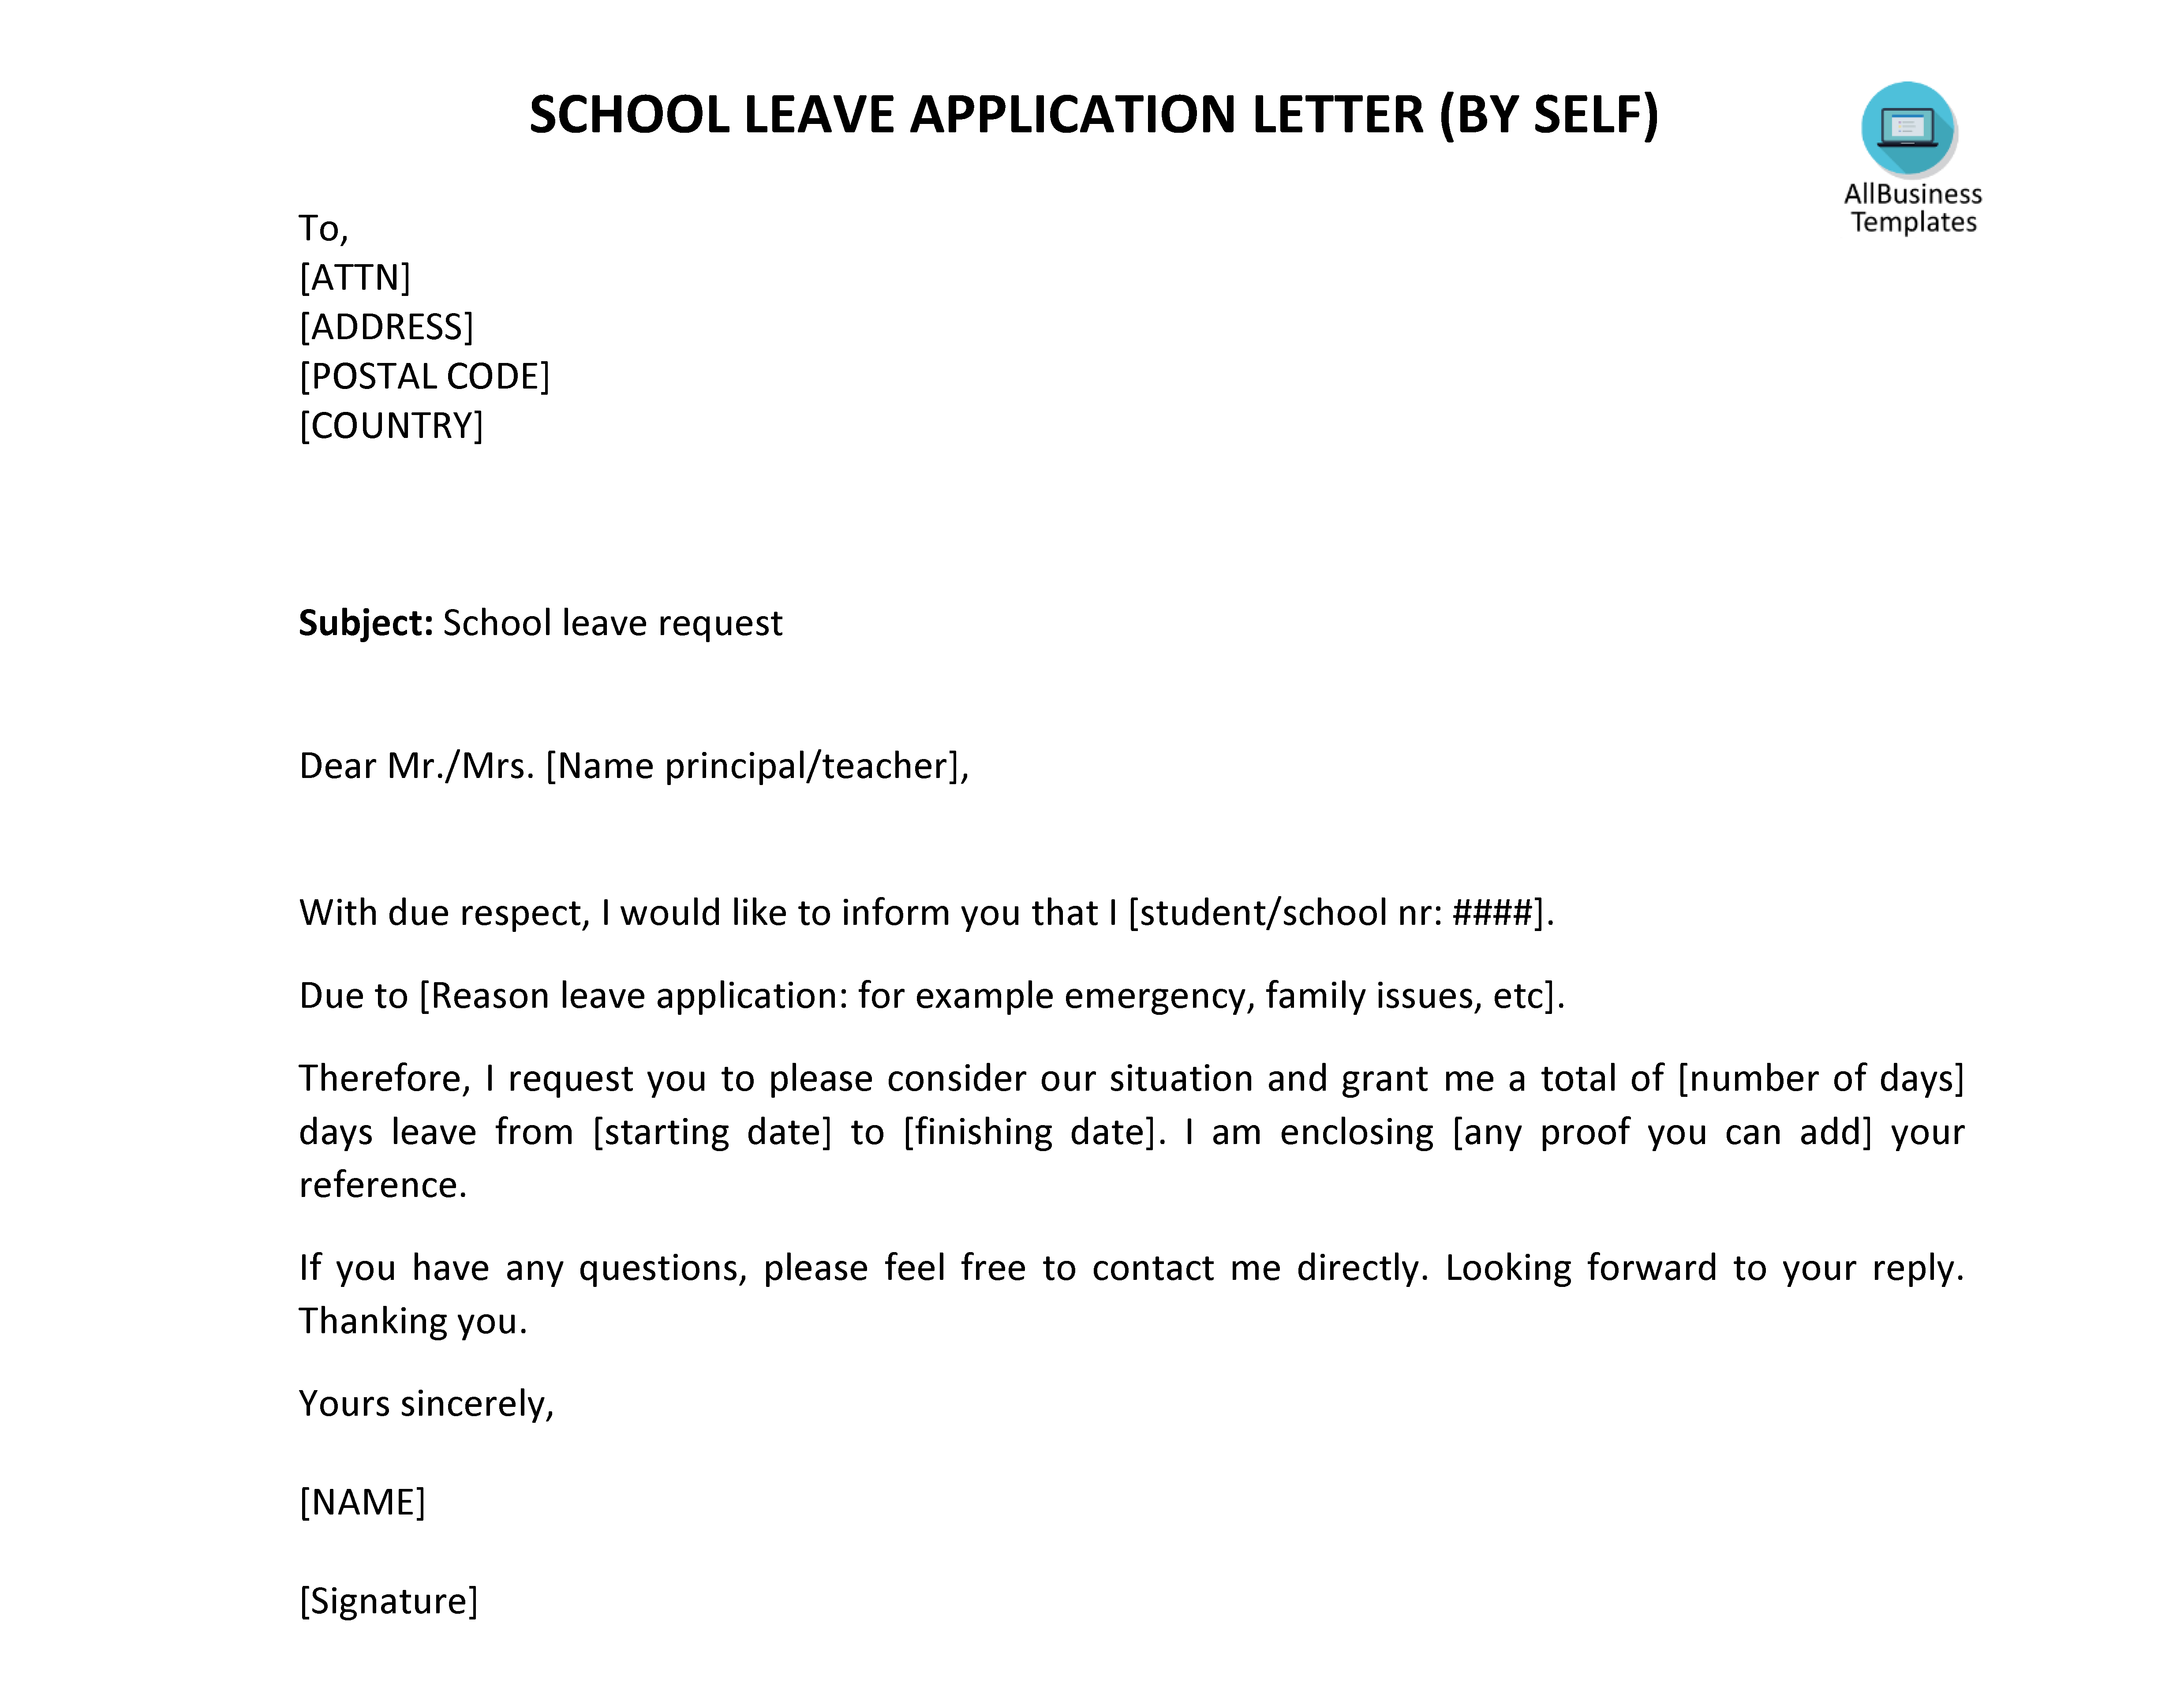 school leave letter by self plantilla imagen principal